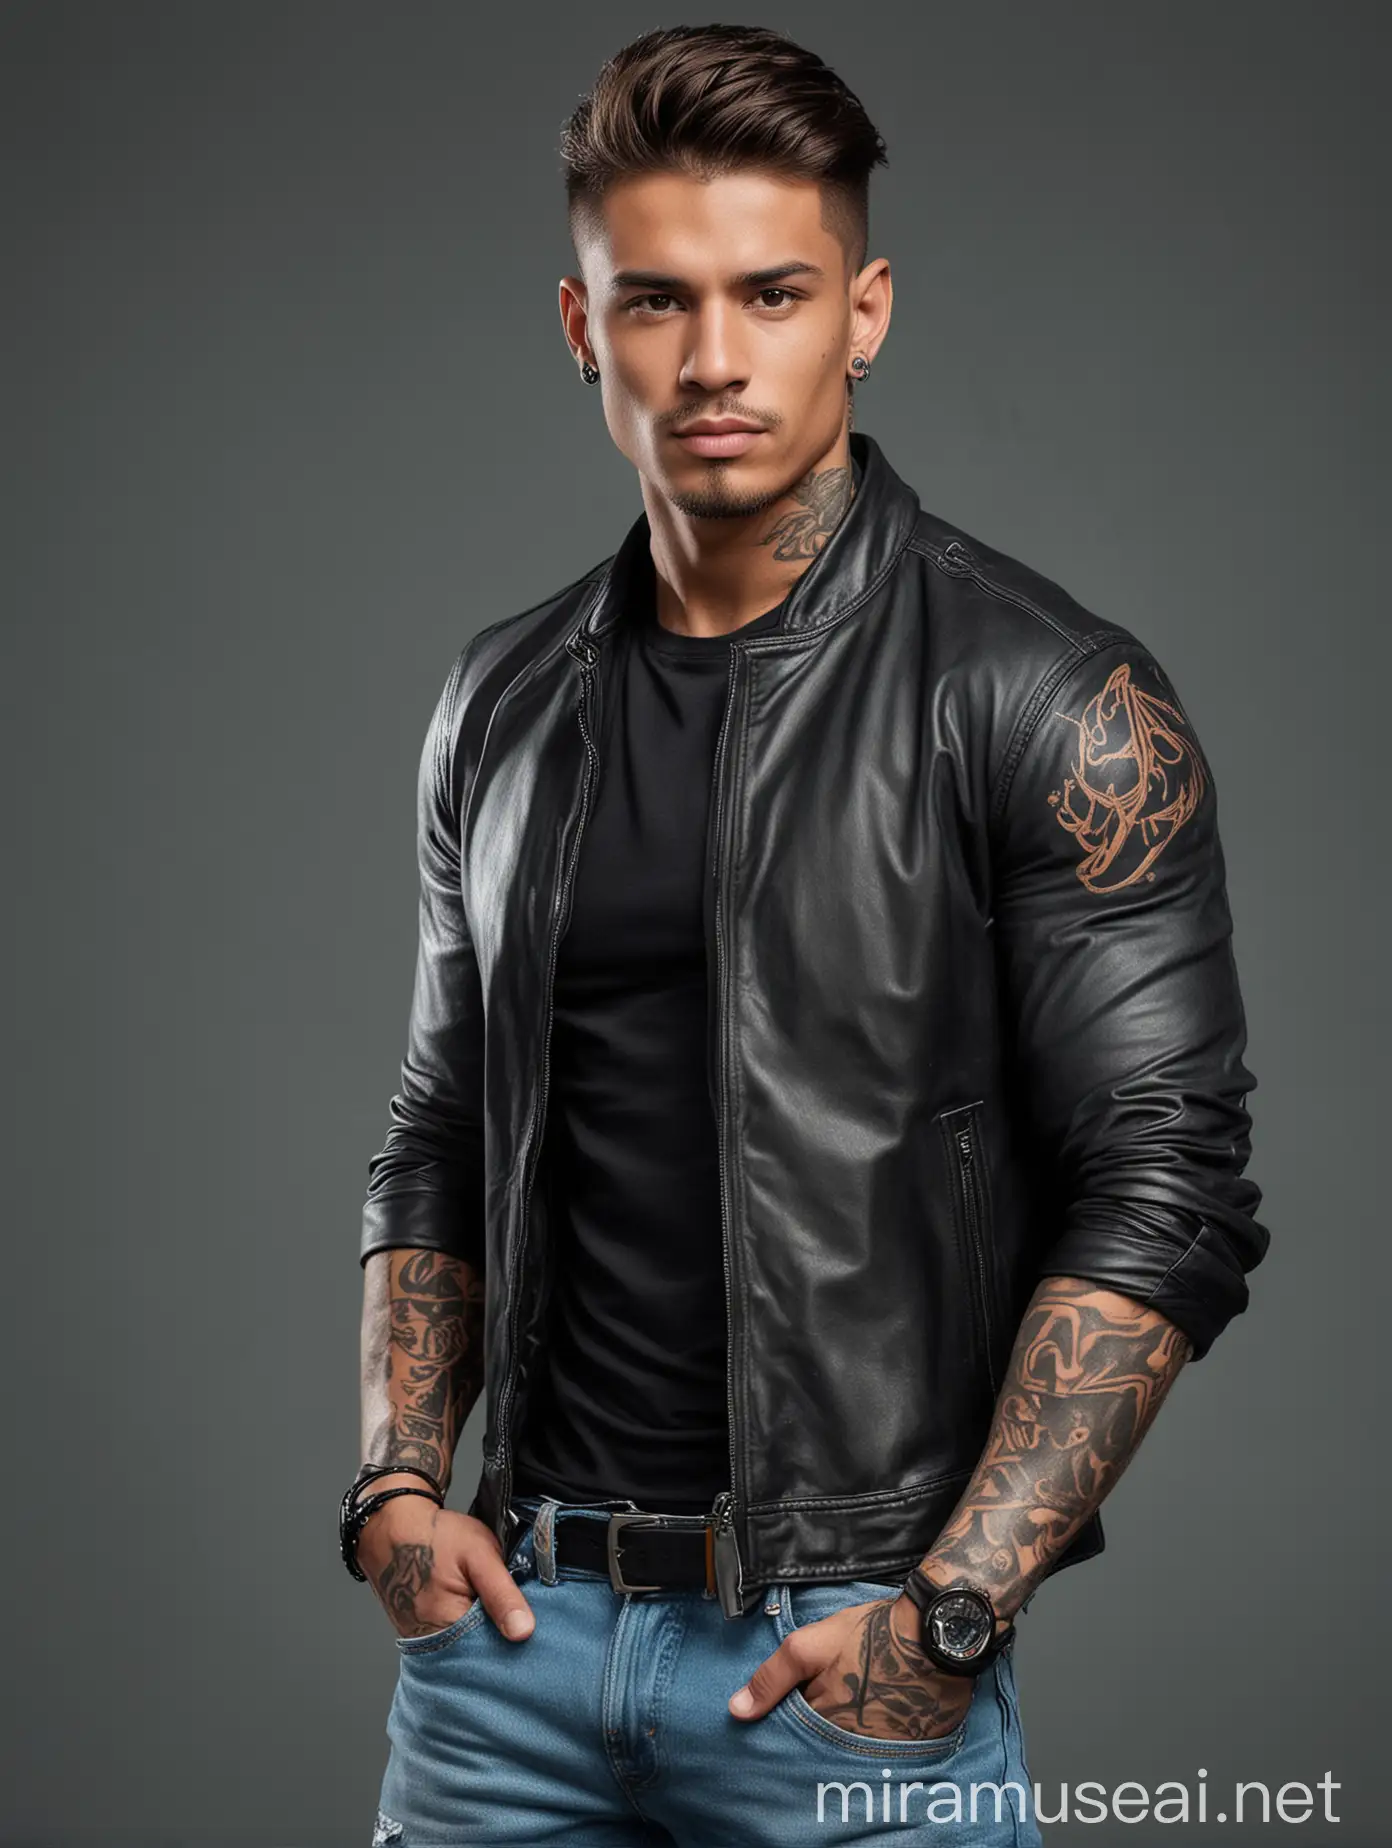 Hombre musculoso, latino, con tatuajes.  de cabello marron, camisa negra, chaqueta de cuero negra, jeans azul claro